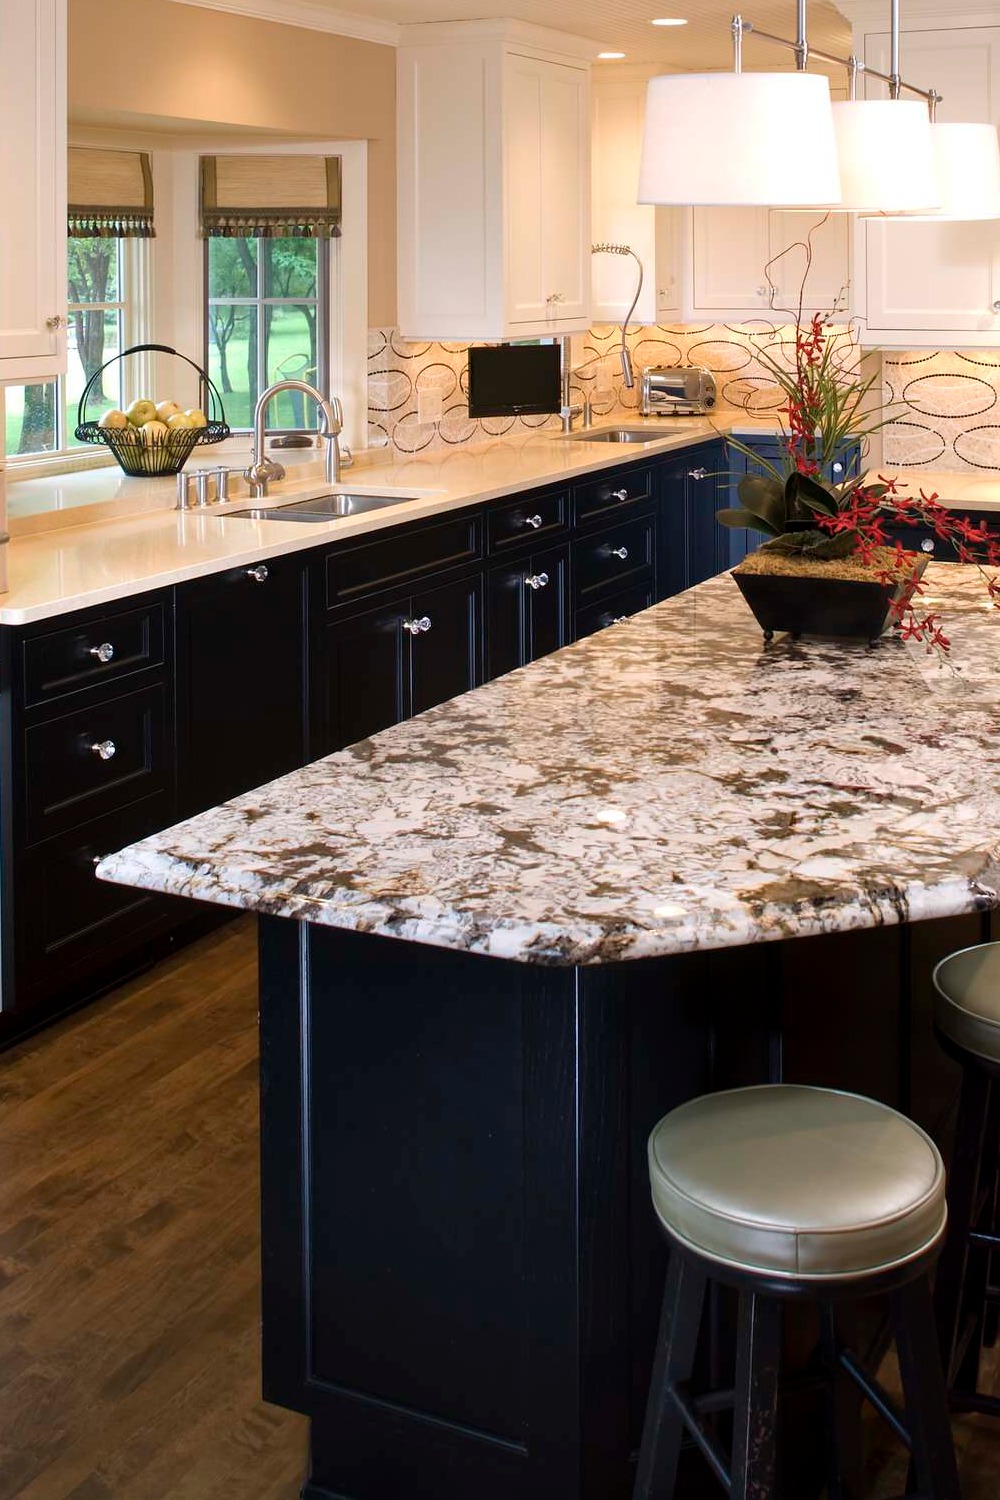 White Quartz Kitchen Granite Countertops Dark Base Cabinets Cream Backsplash Hardwood Floor